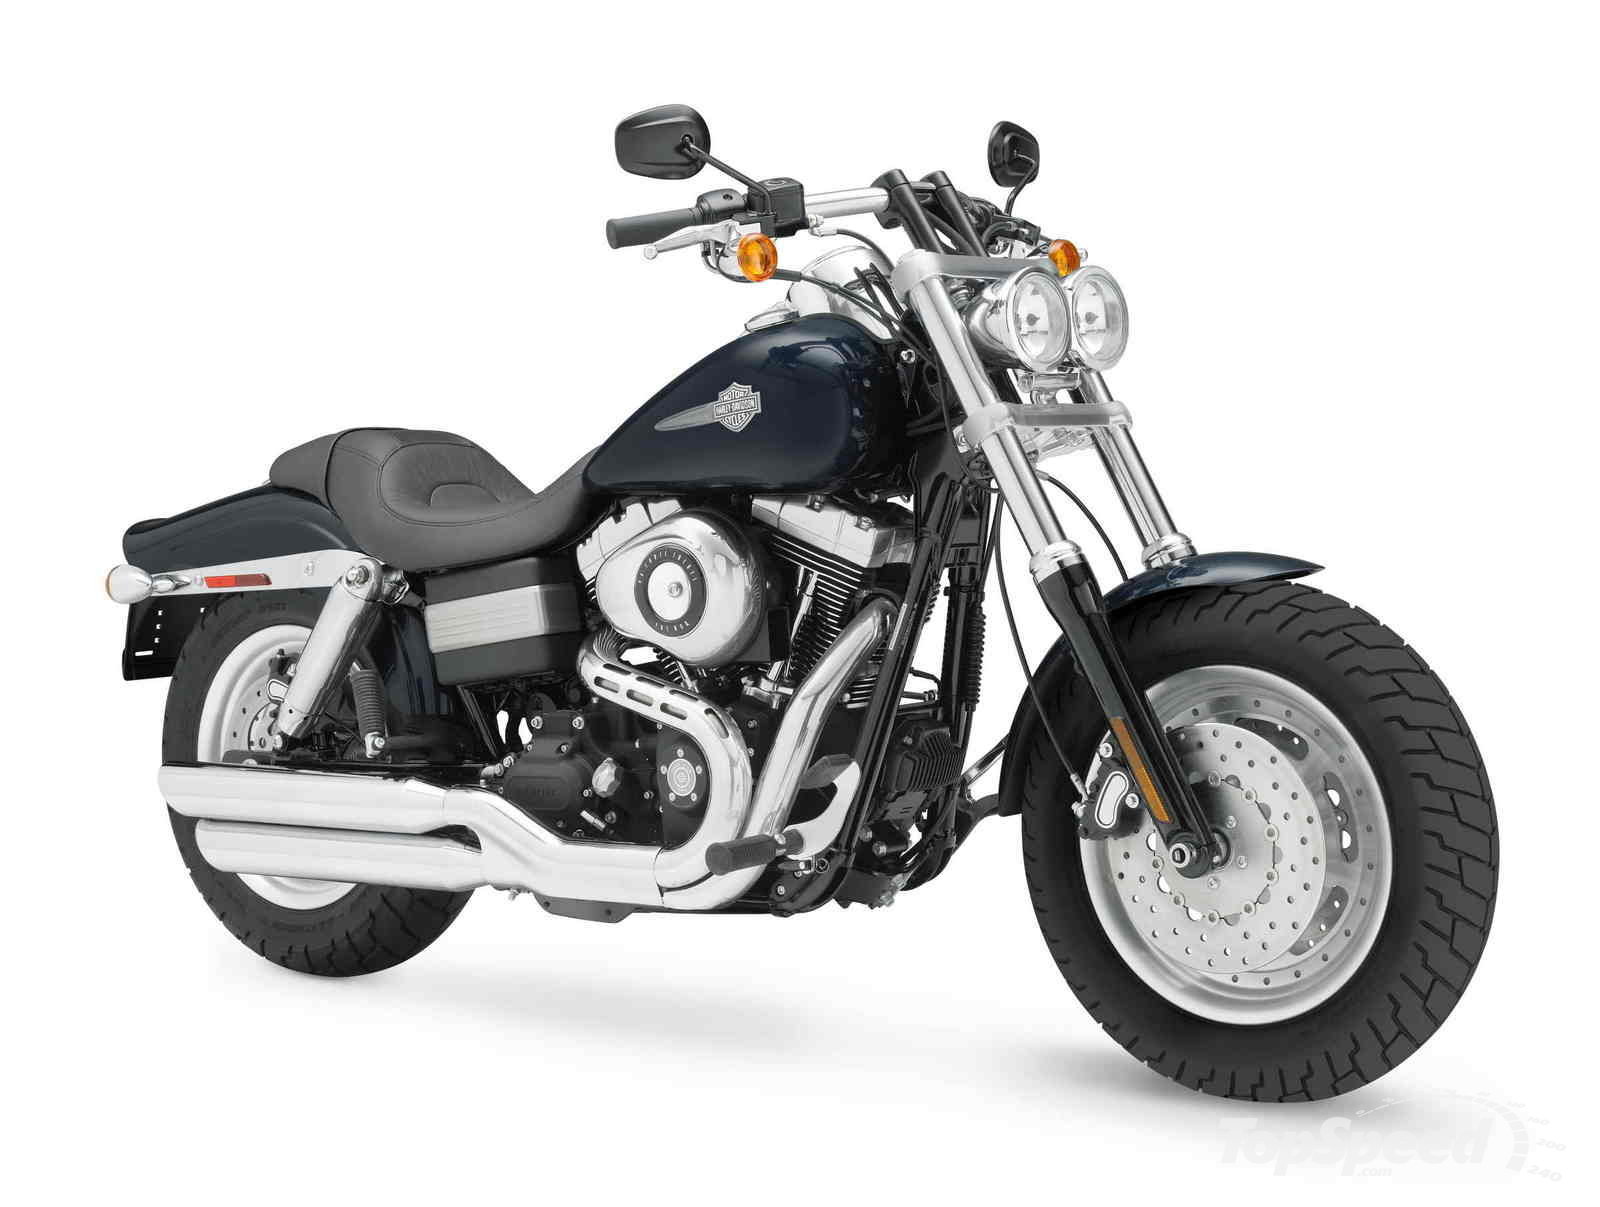 Harley Davidson Softail Custom Specifications